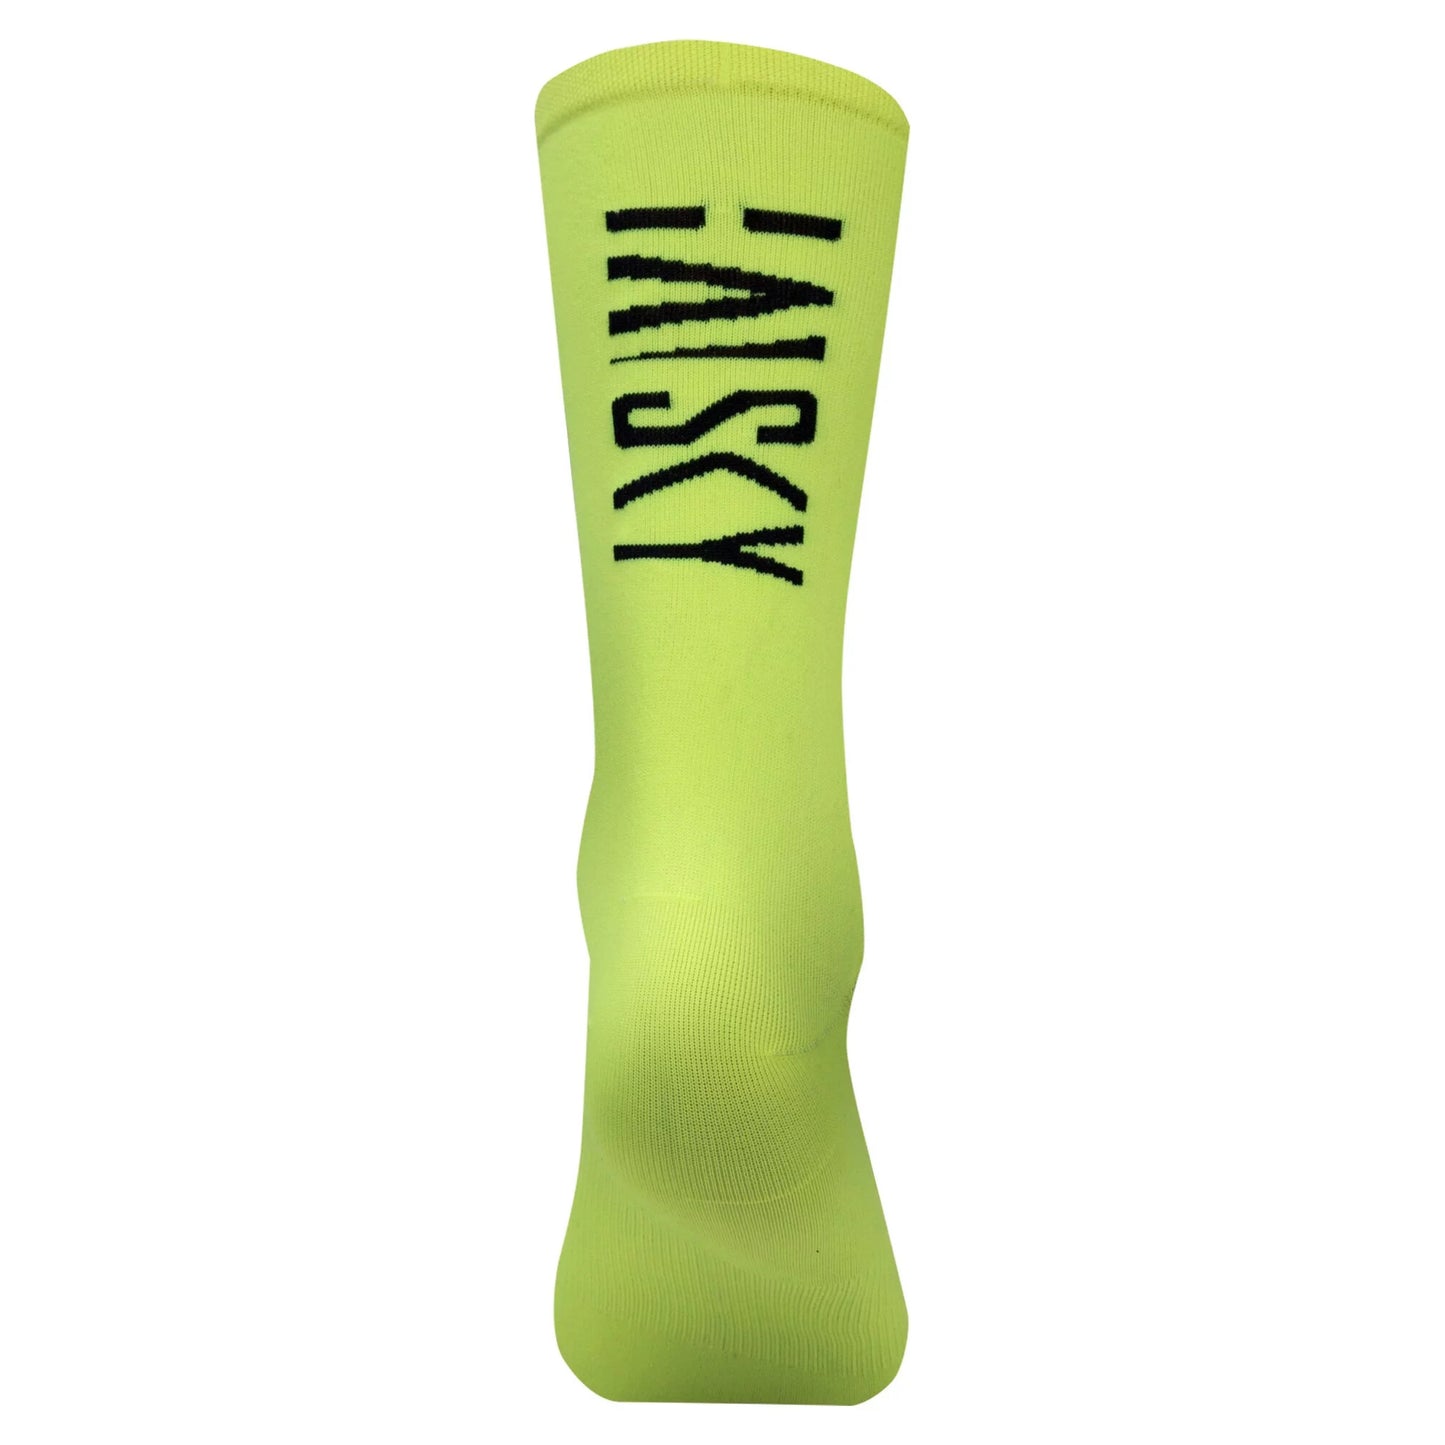 Baisky Premium Cycling Socks - TRSS129 Purity Yellow